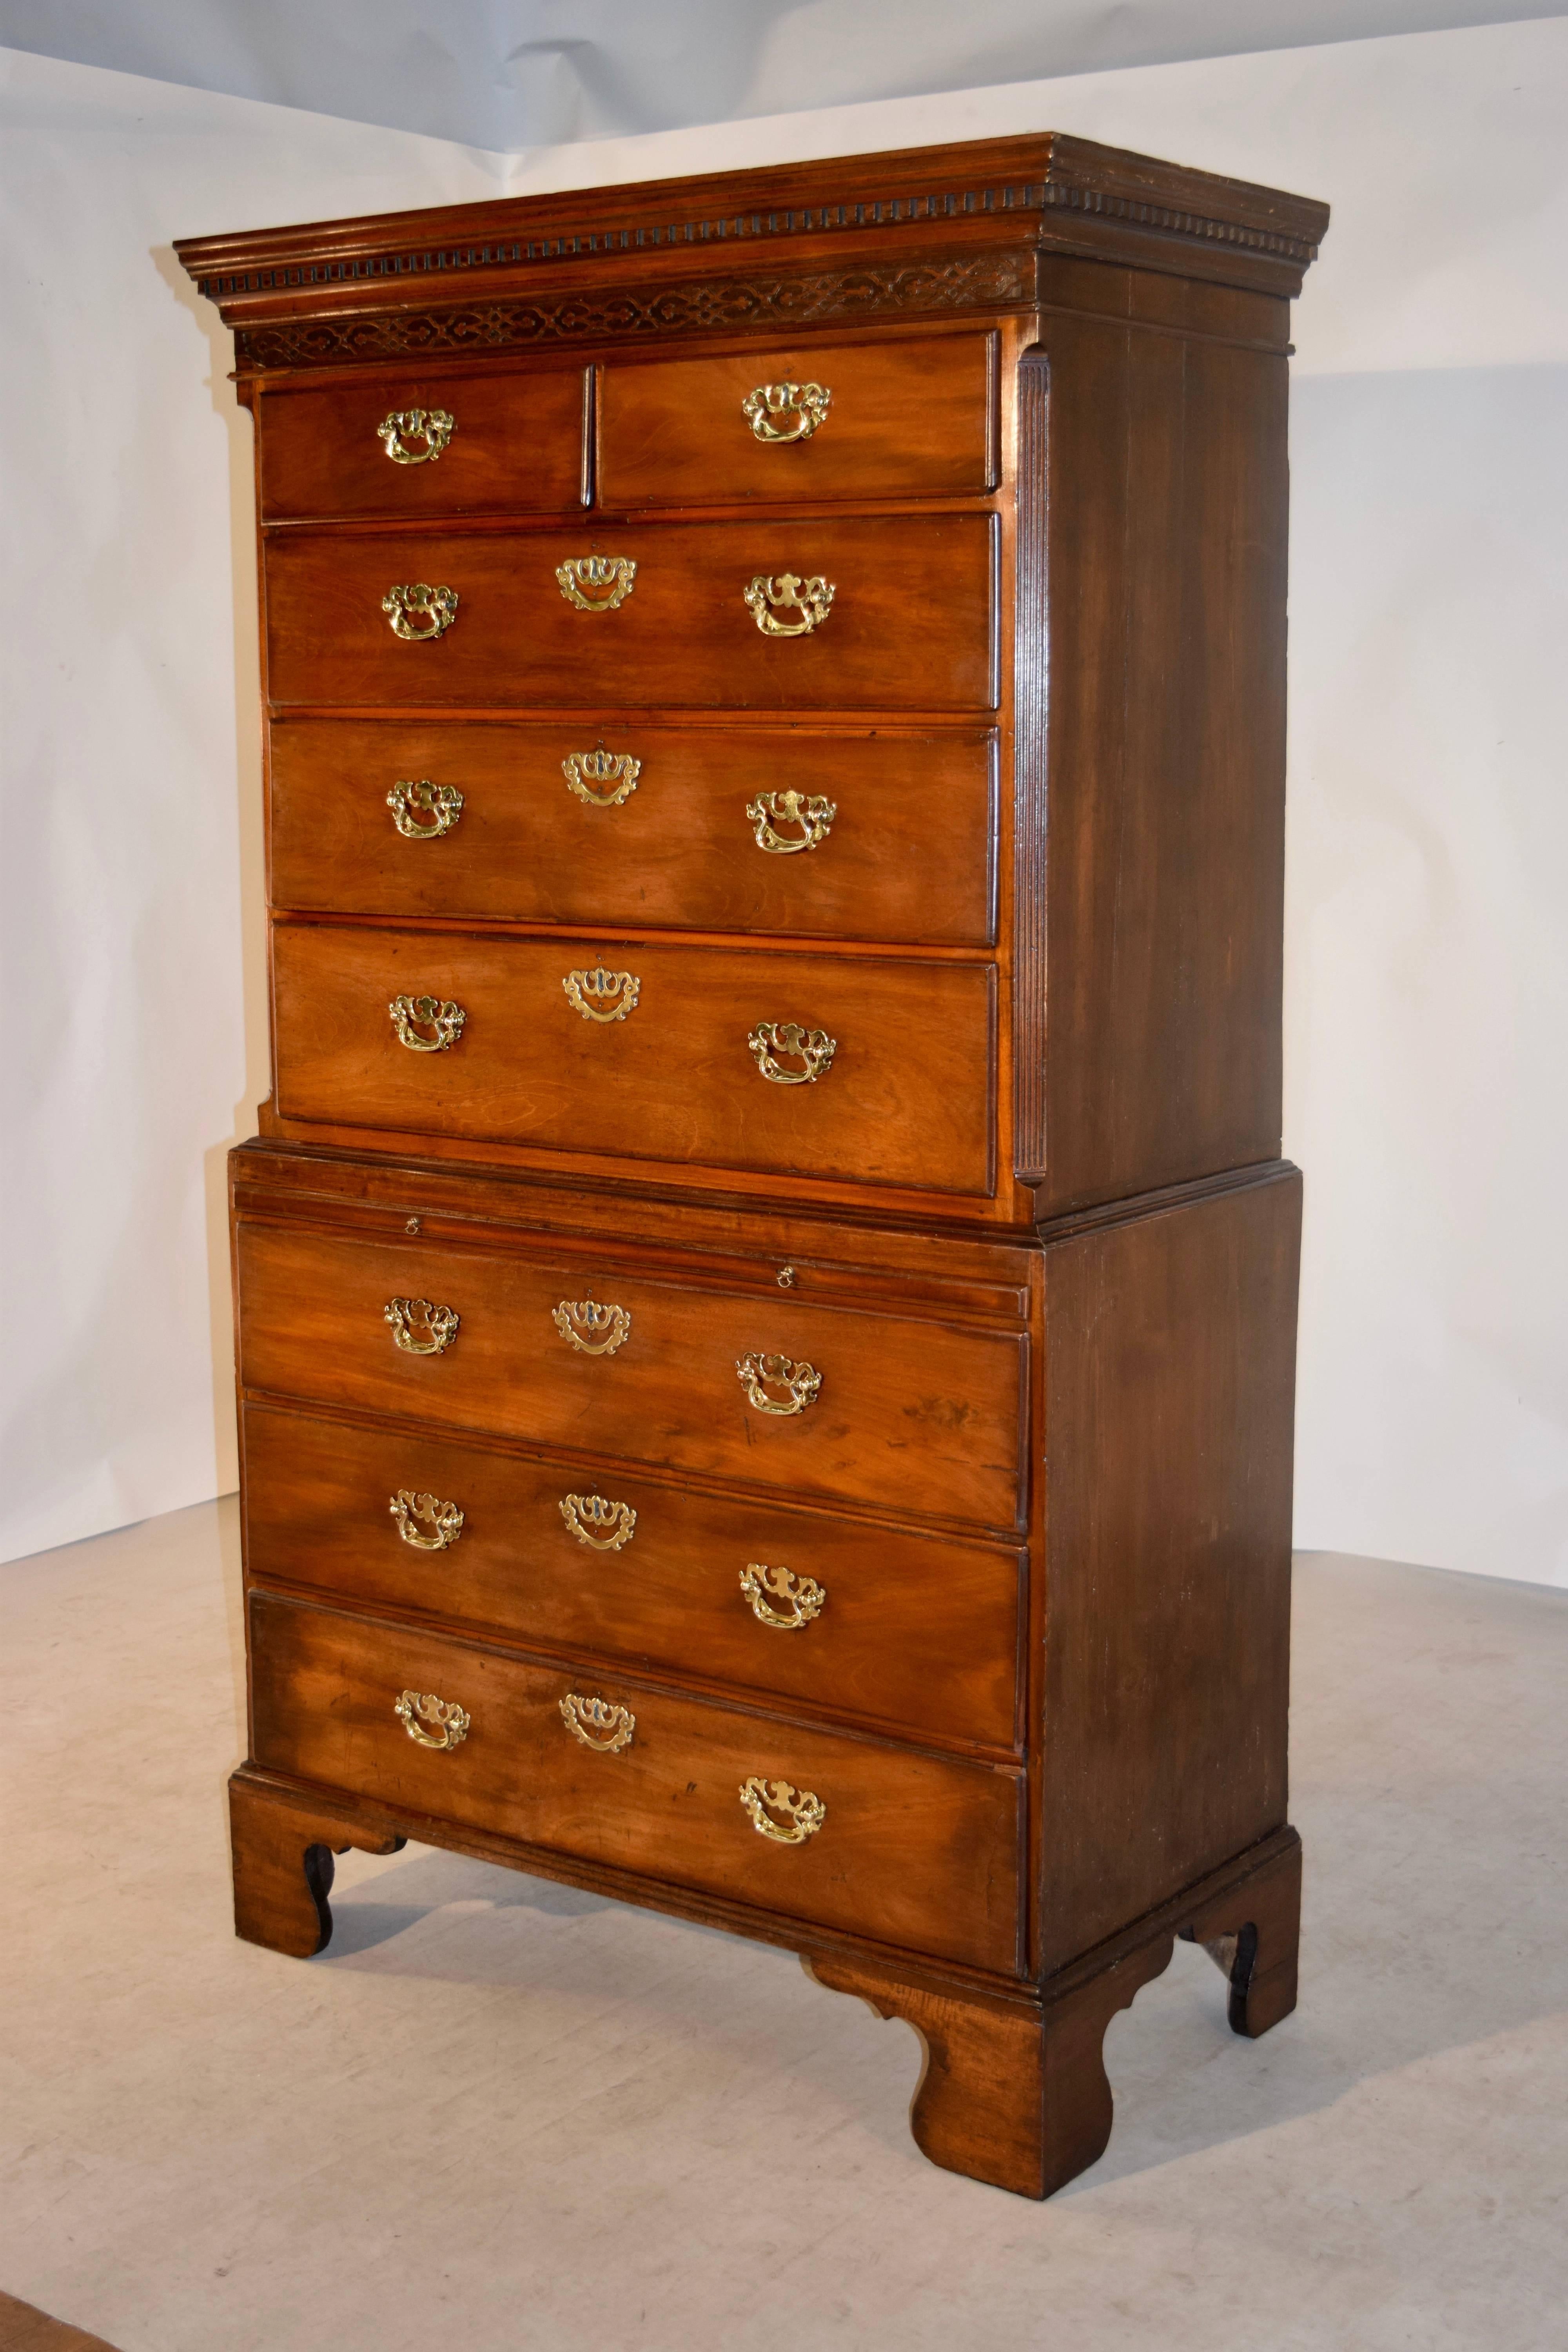 18th century chest